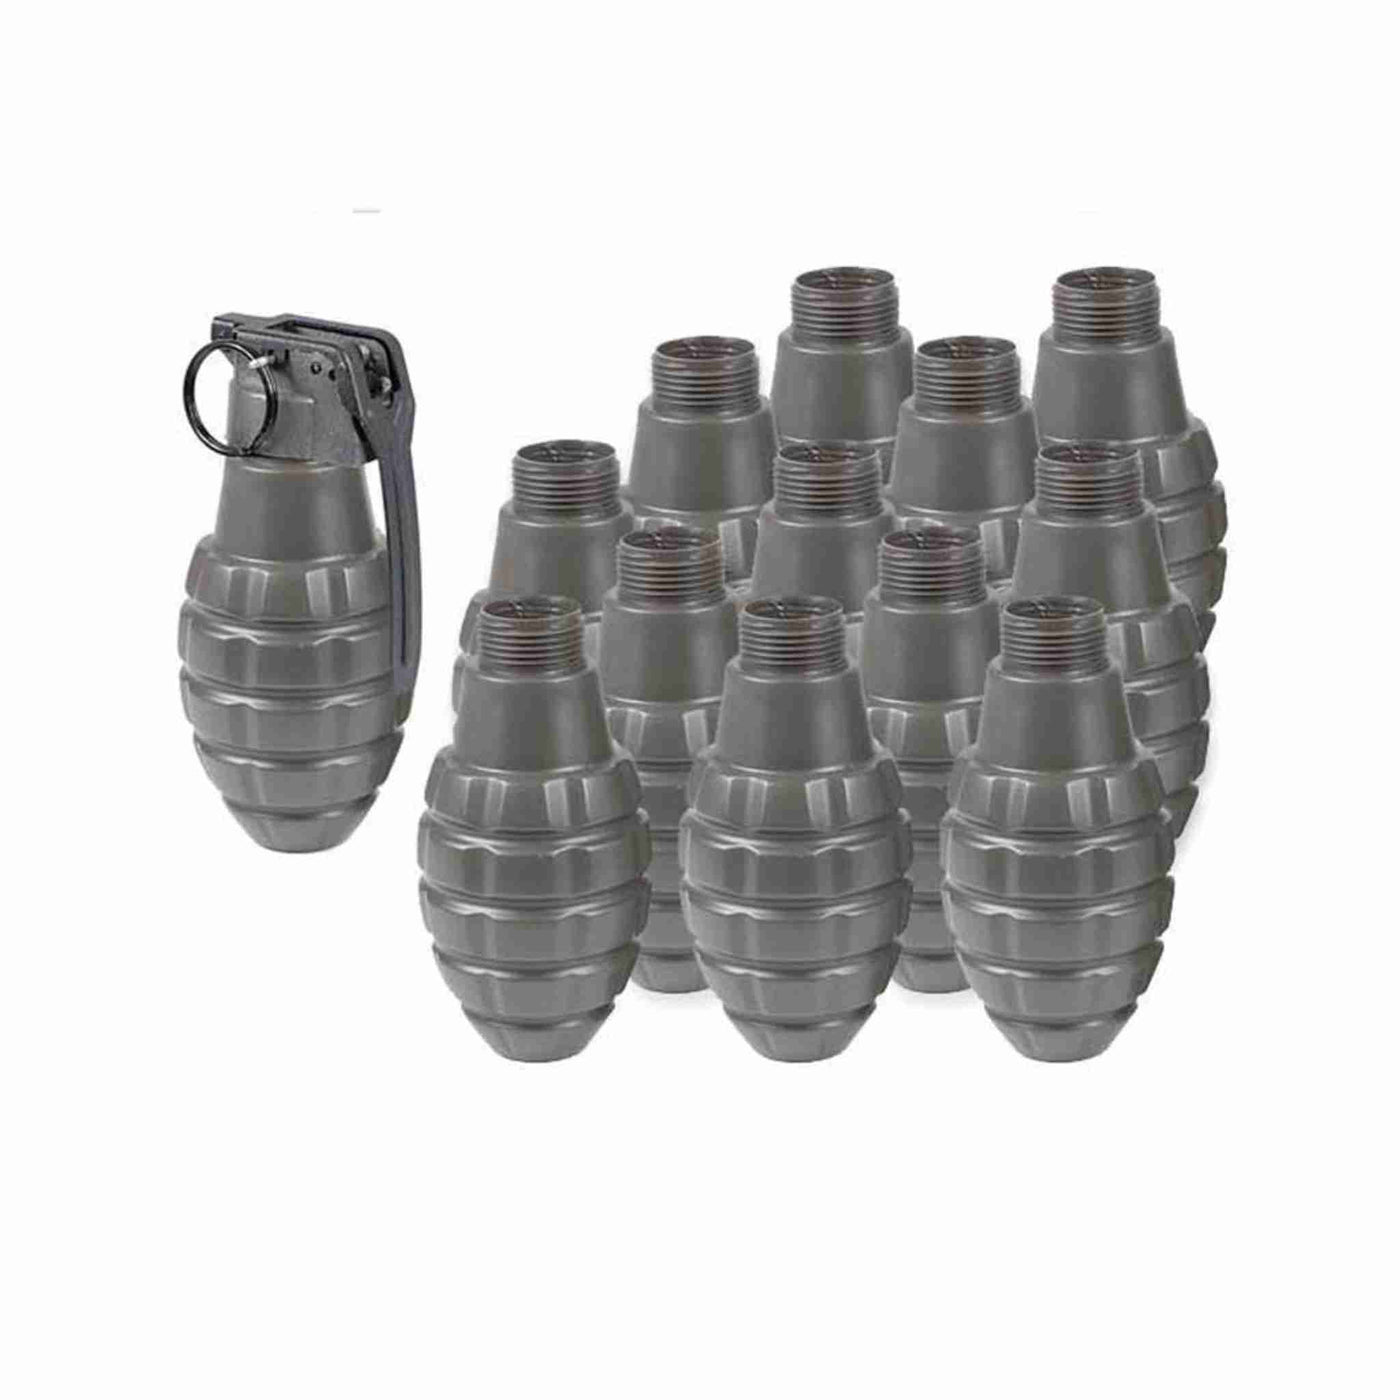 Thunder B Flash Bang Pineapple Grenade - 12 Pack